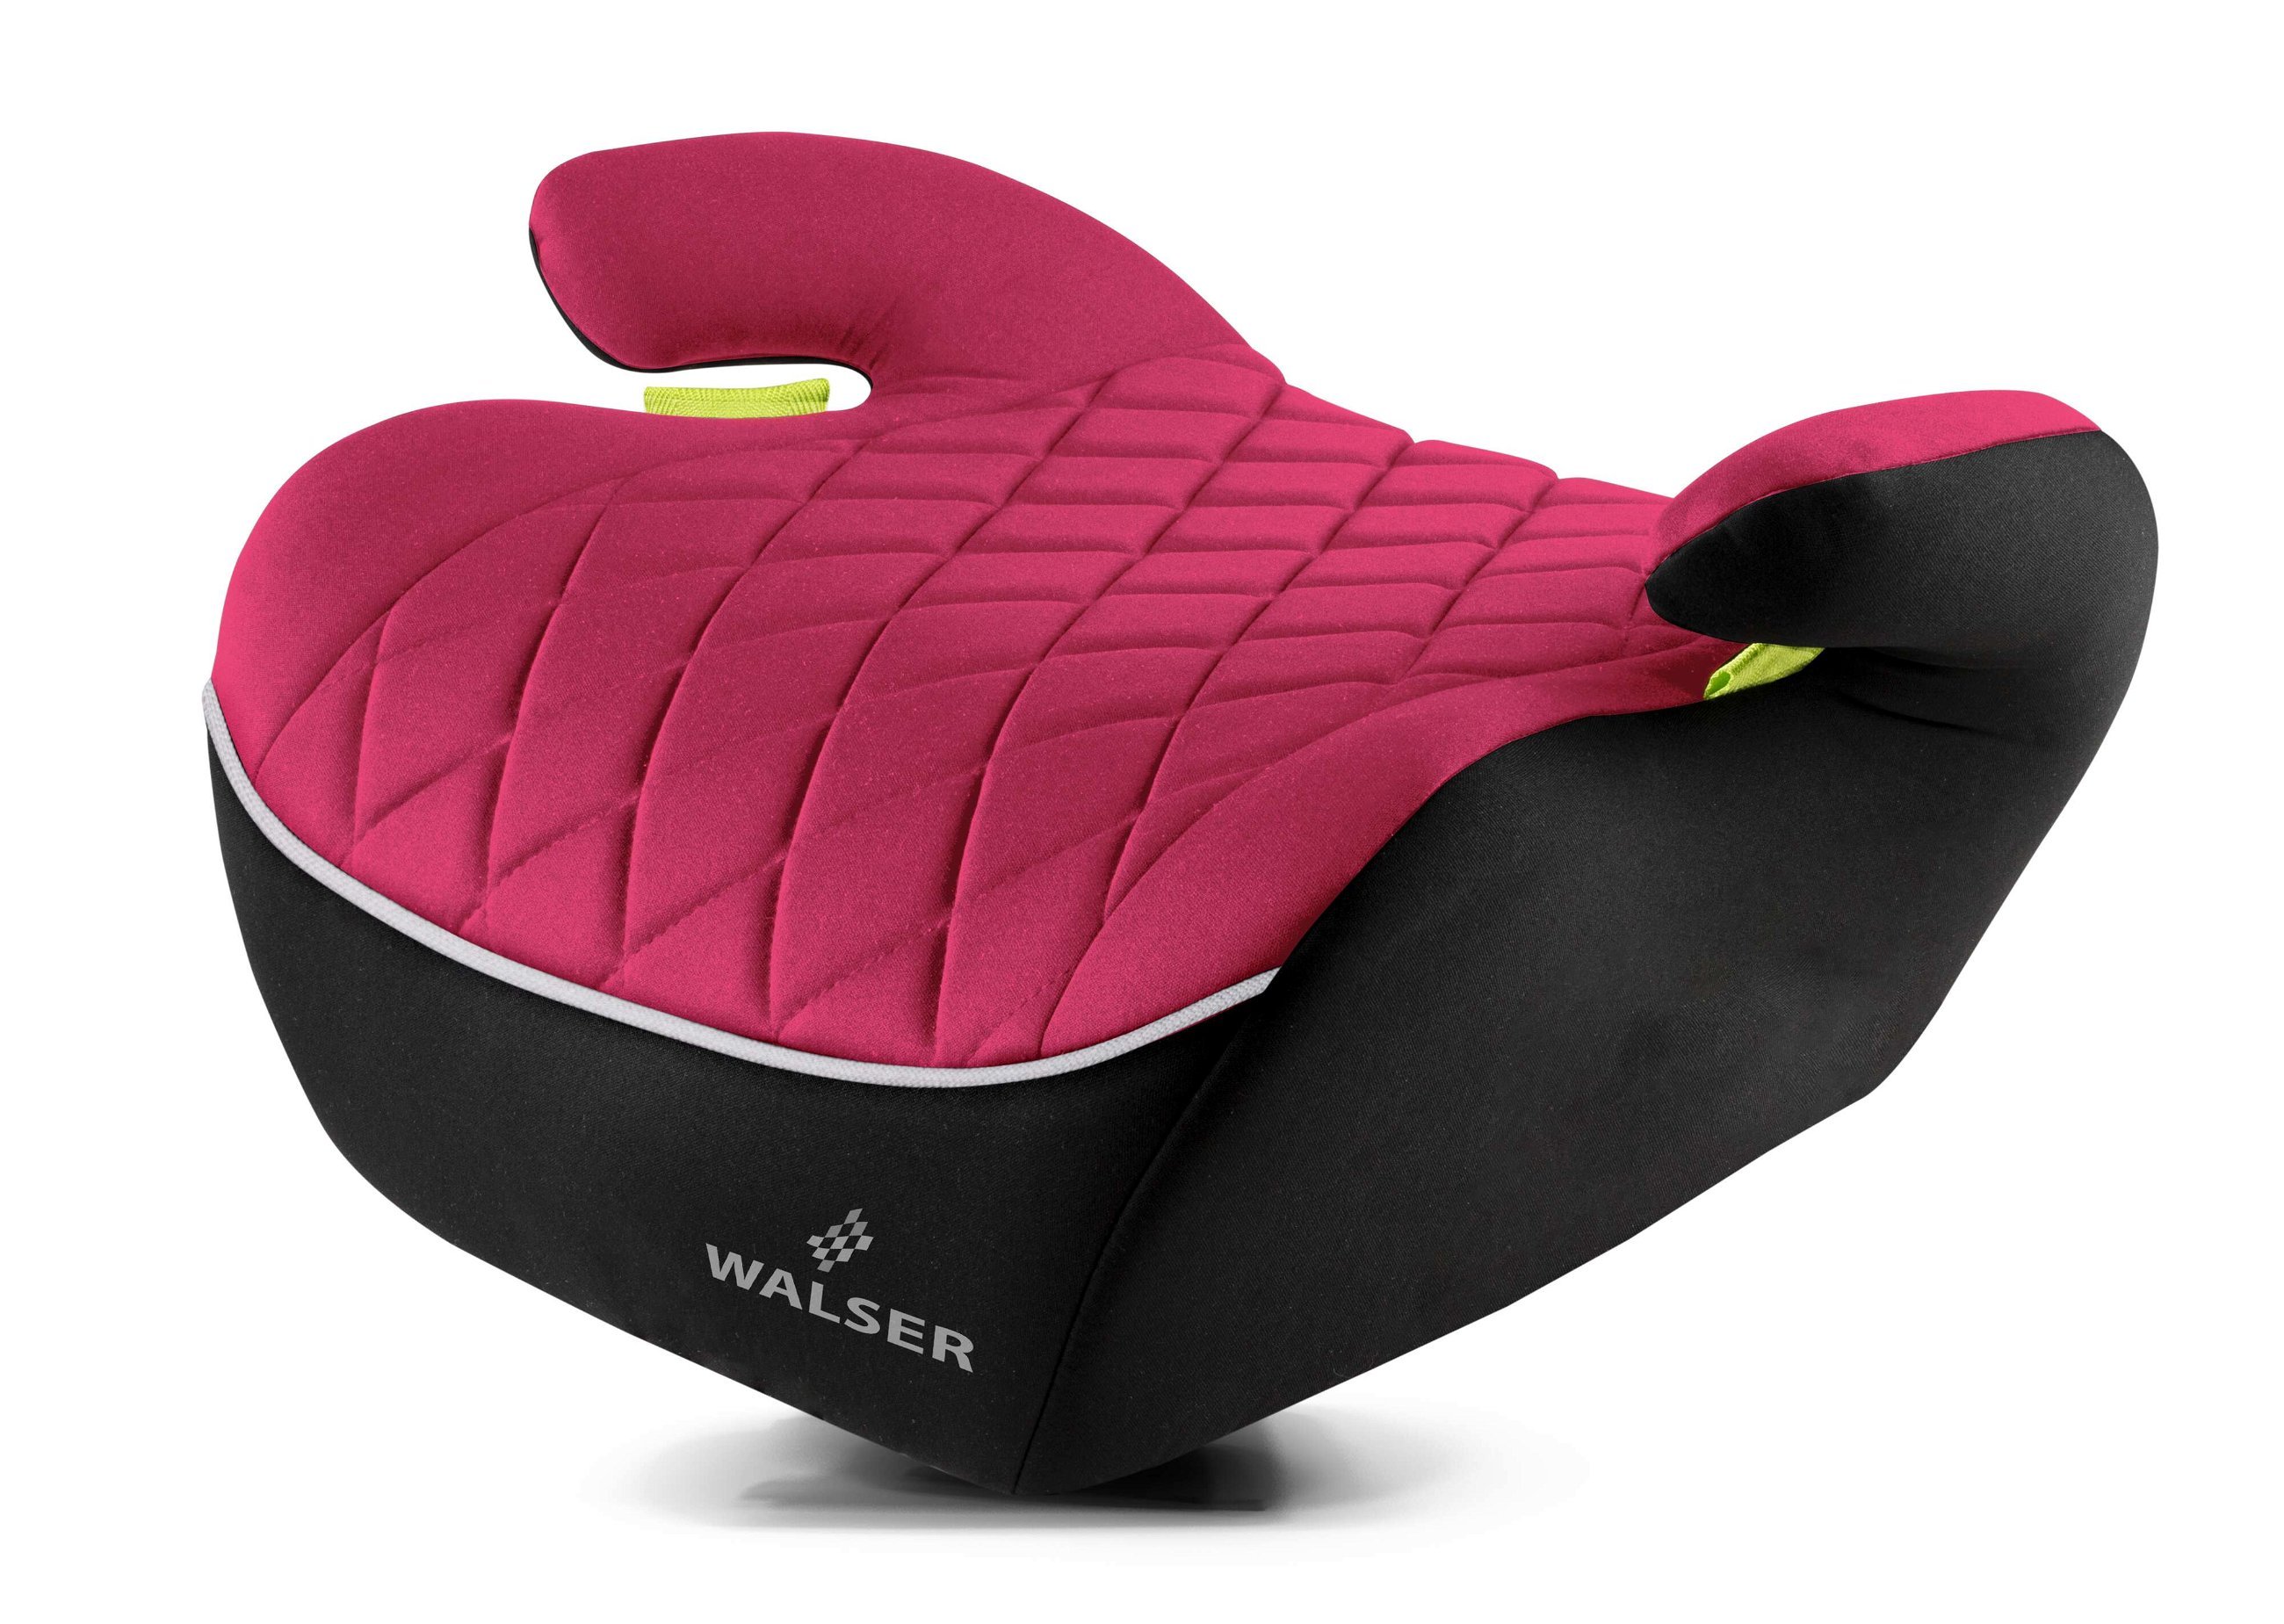 Kindersitzerhöhung Andy, Premium Sitzerhöhung Auto ECE R 129 geprüft, Kindersitz schwarz/pink